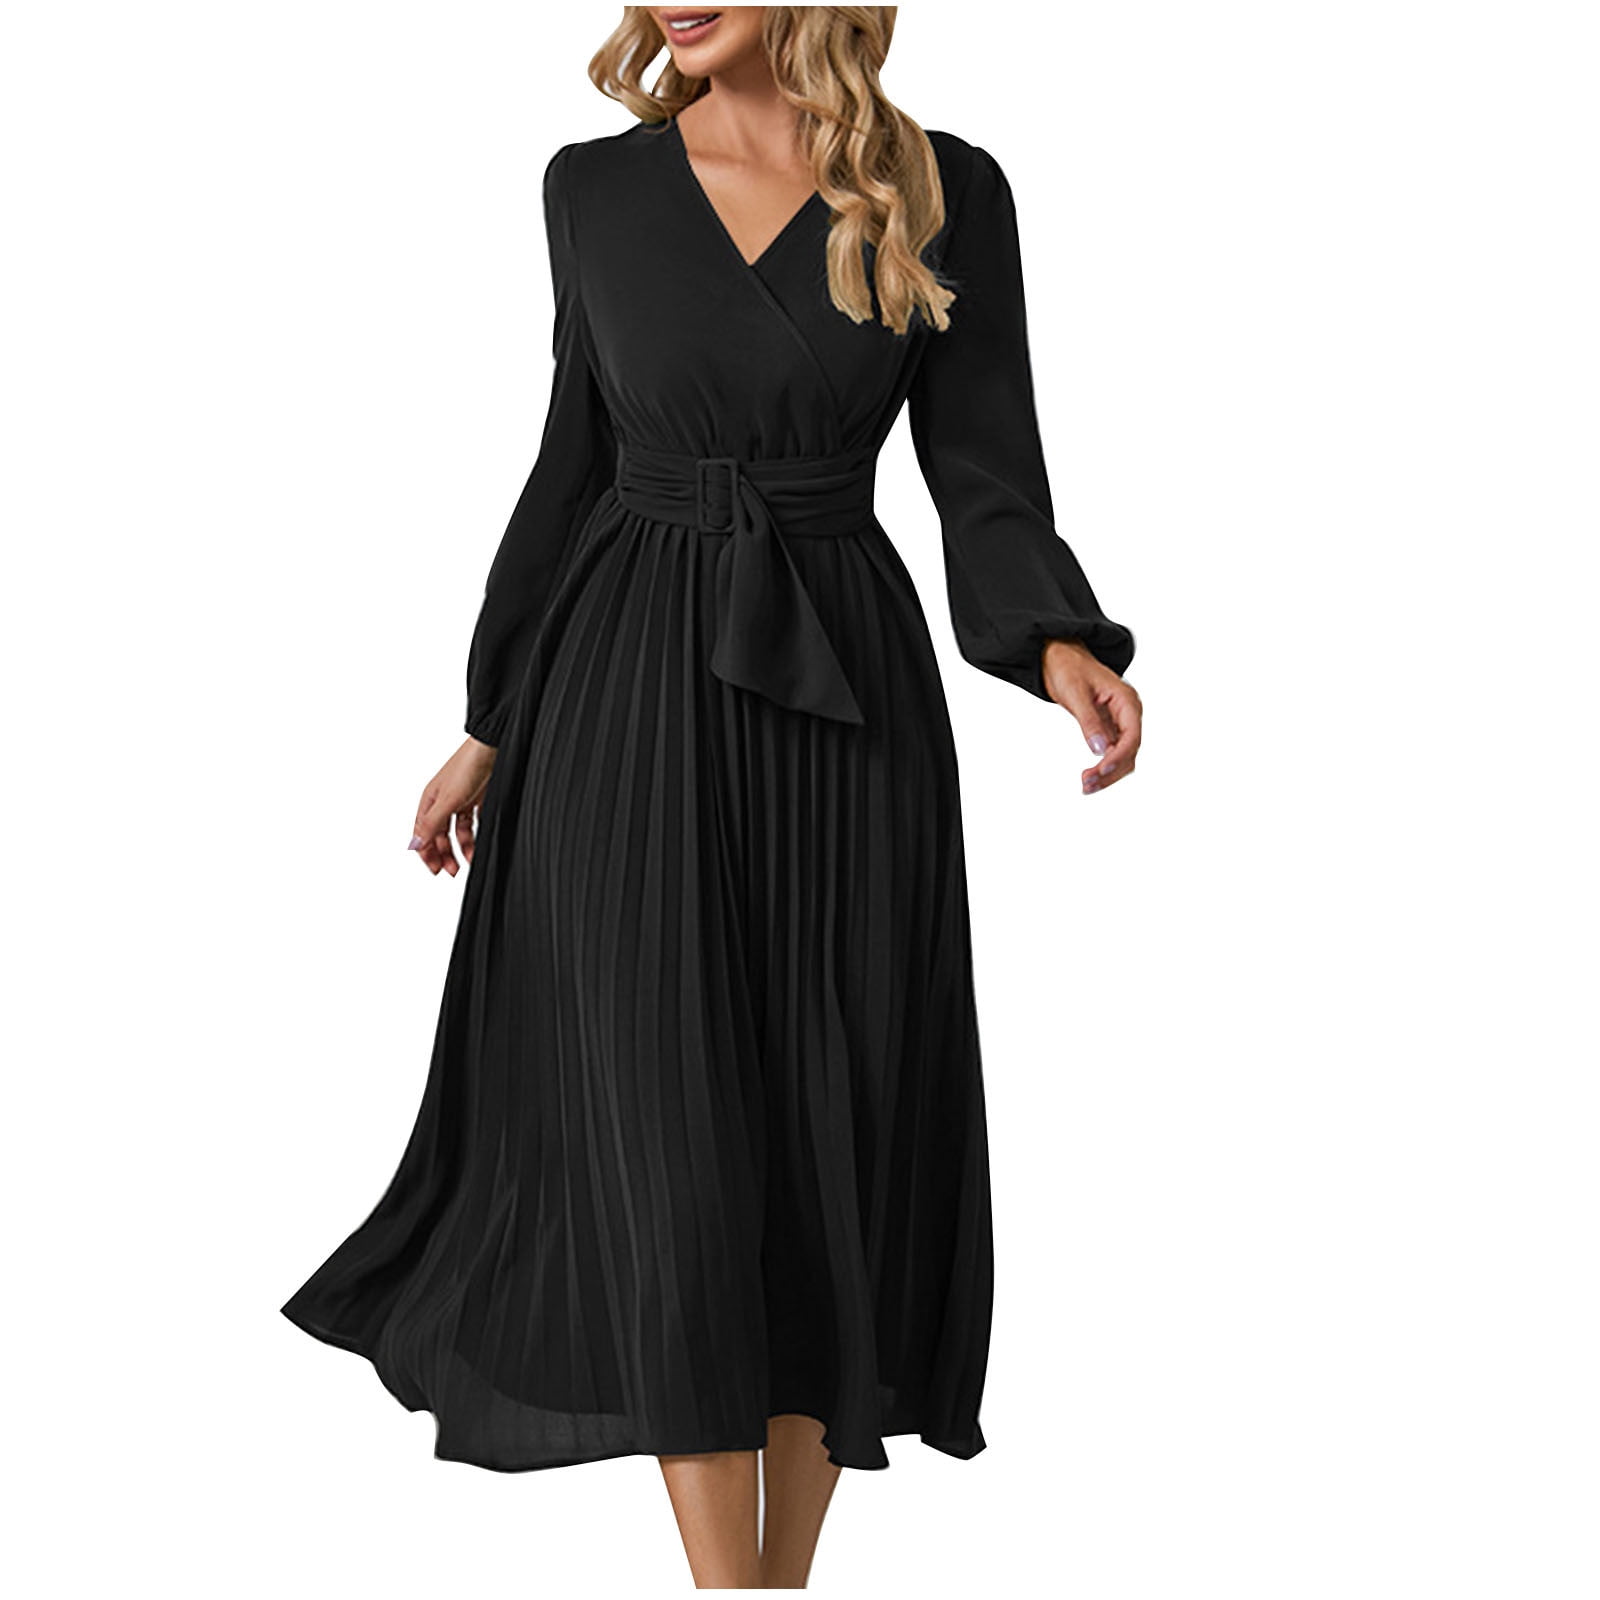 black dress for funeral